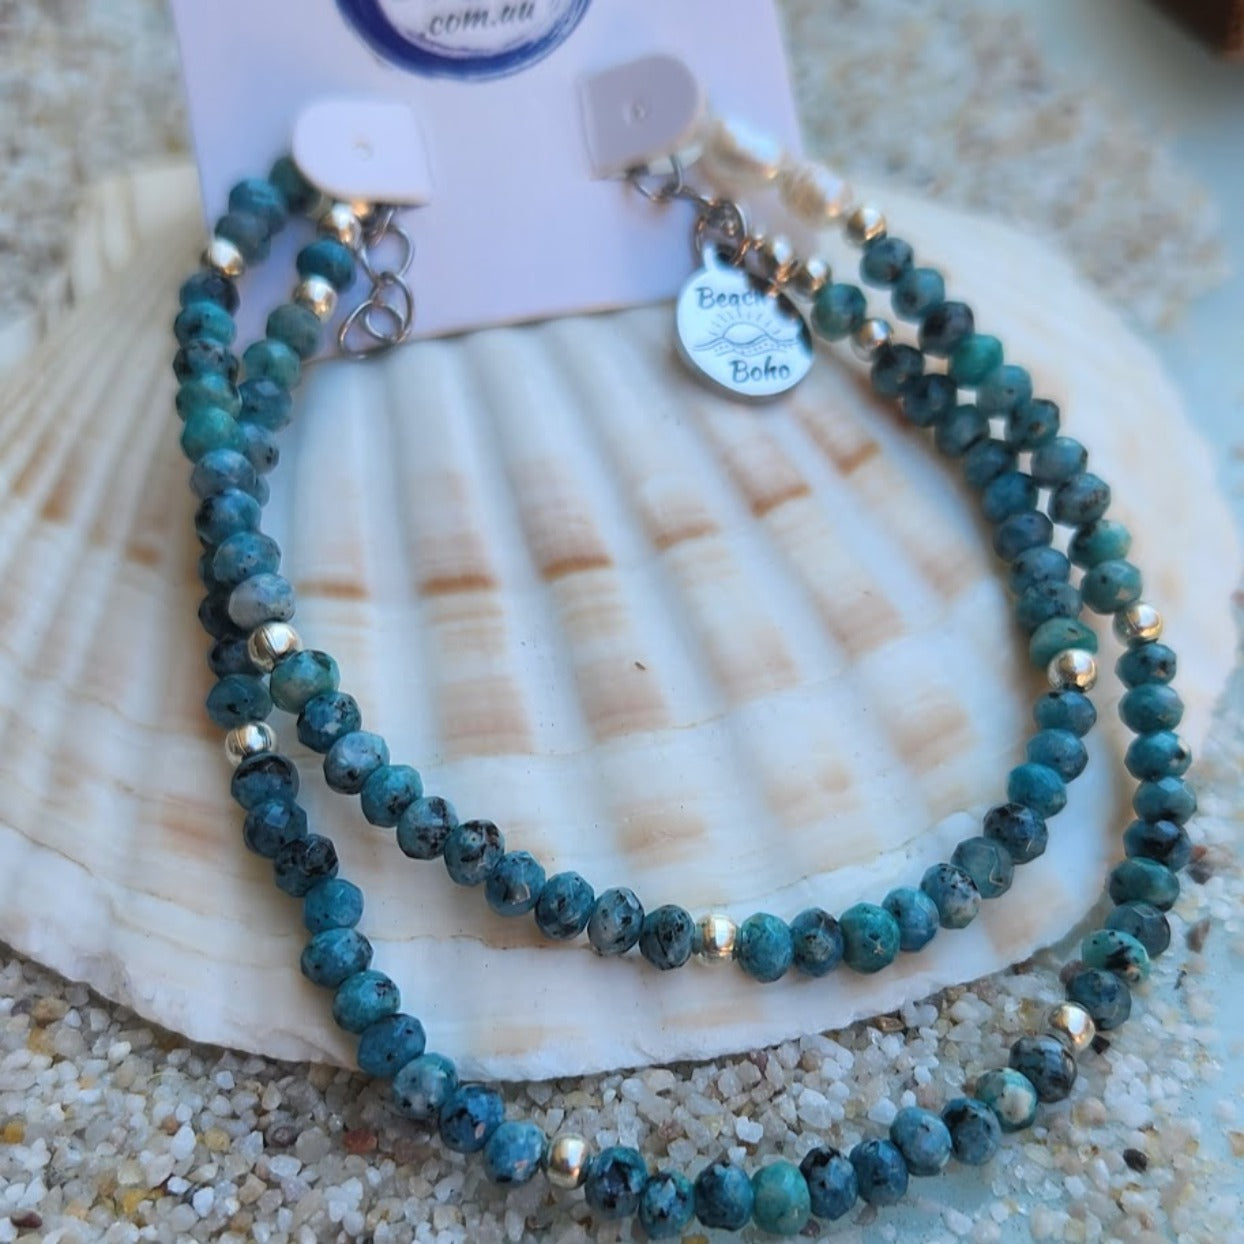 SEA BLUE - SILVER  WATERPROOF NECKLACE - Premium necklaces from www.beachboho.com.au - Just $95! Shop now at www.beachboho.com.au